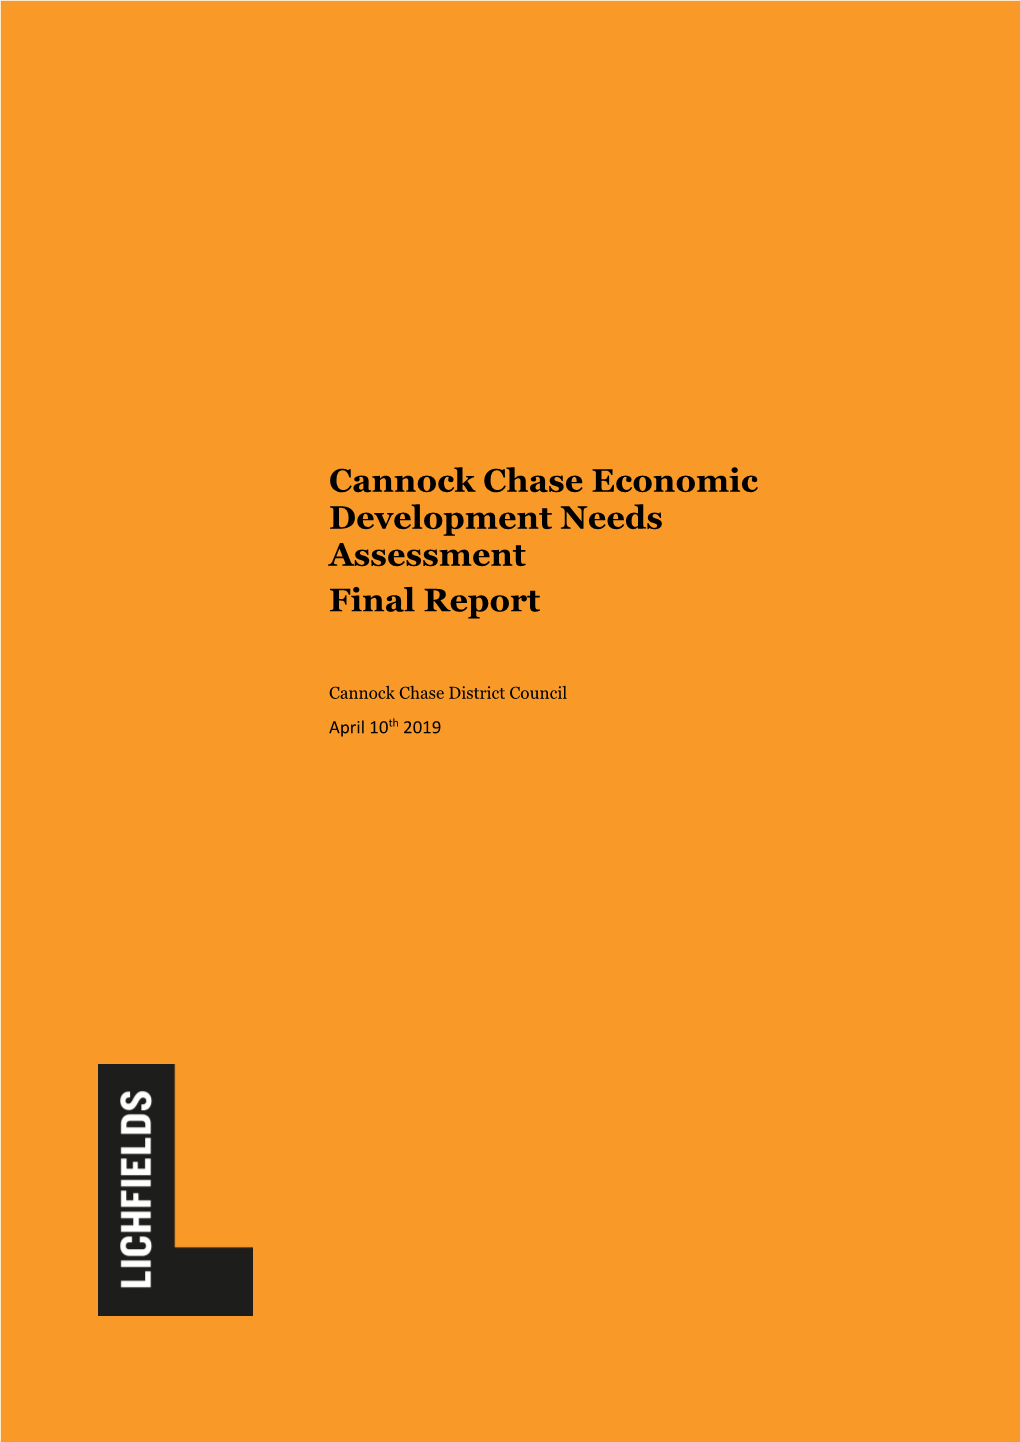 Cannock Chase Economic Development Needs Assessment Final Report